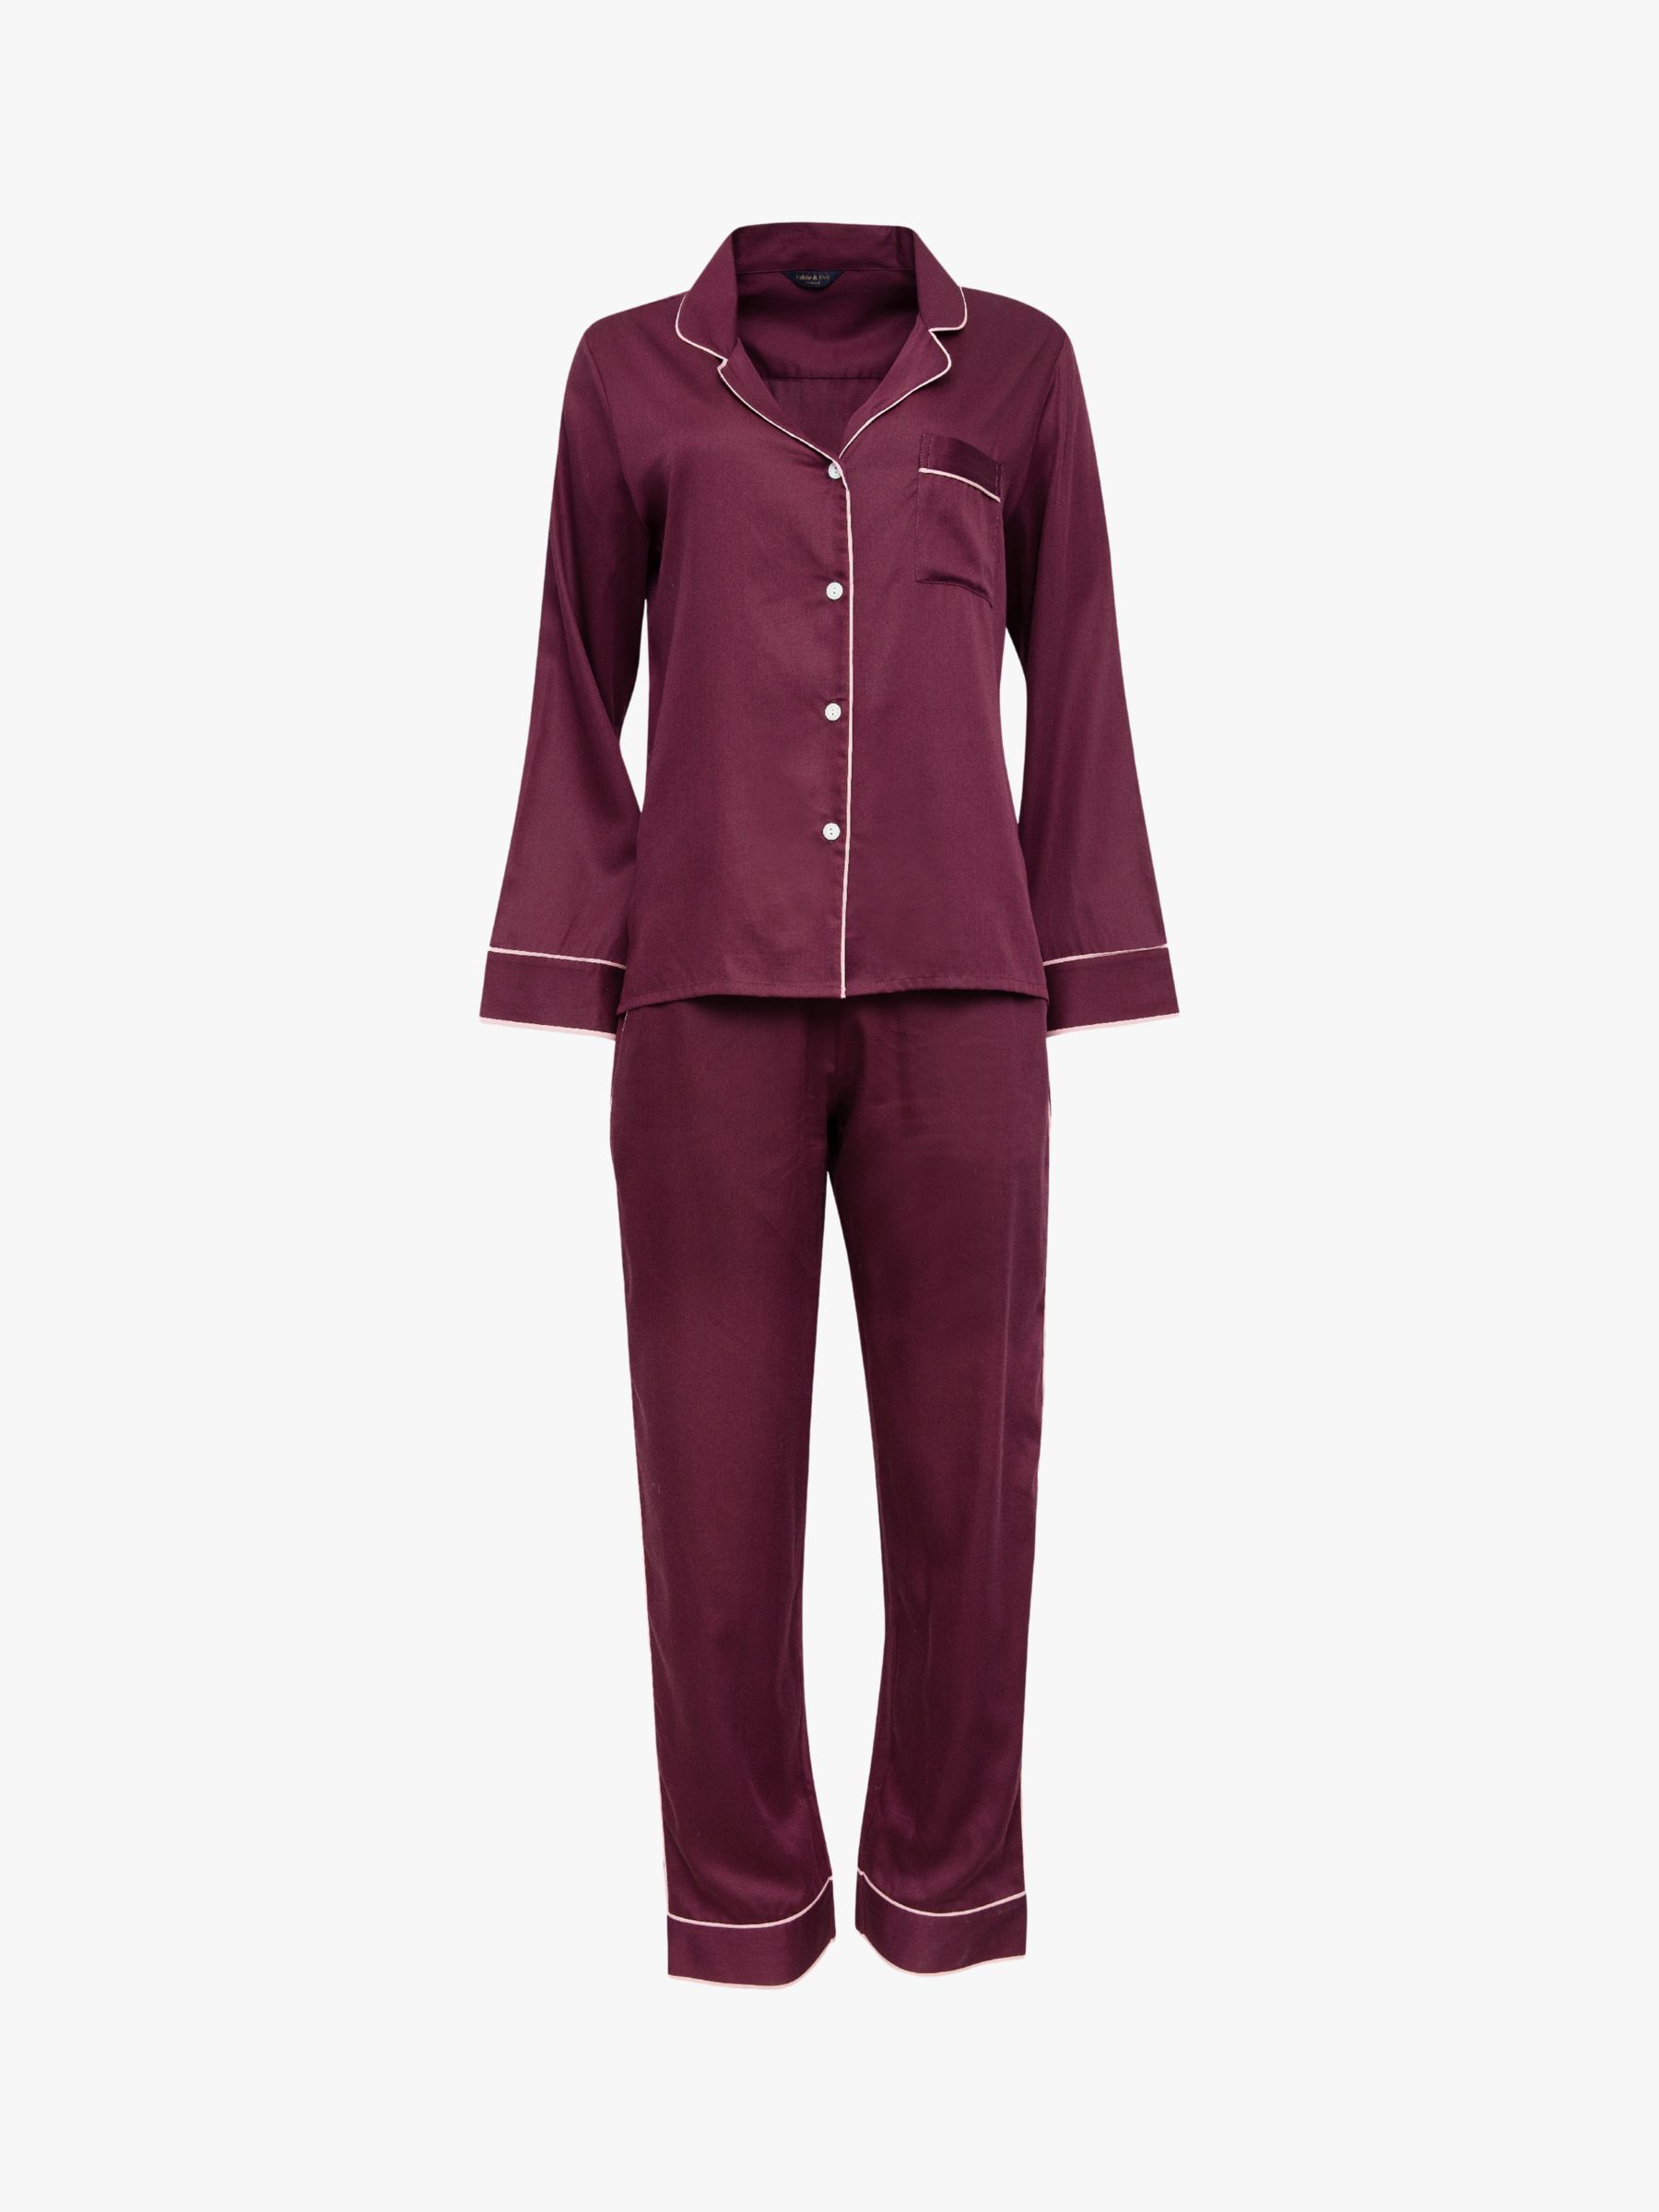 Buy Fable & Eve Piccadilly Pyjama Set, Burgundy Online at johnlewis.com